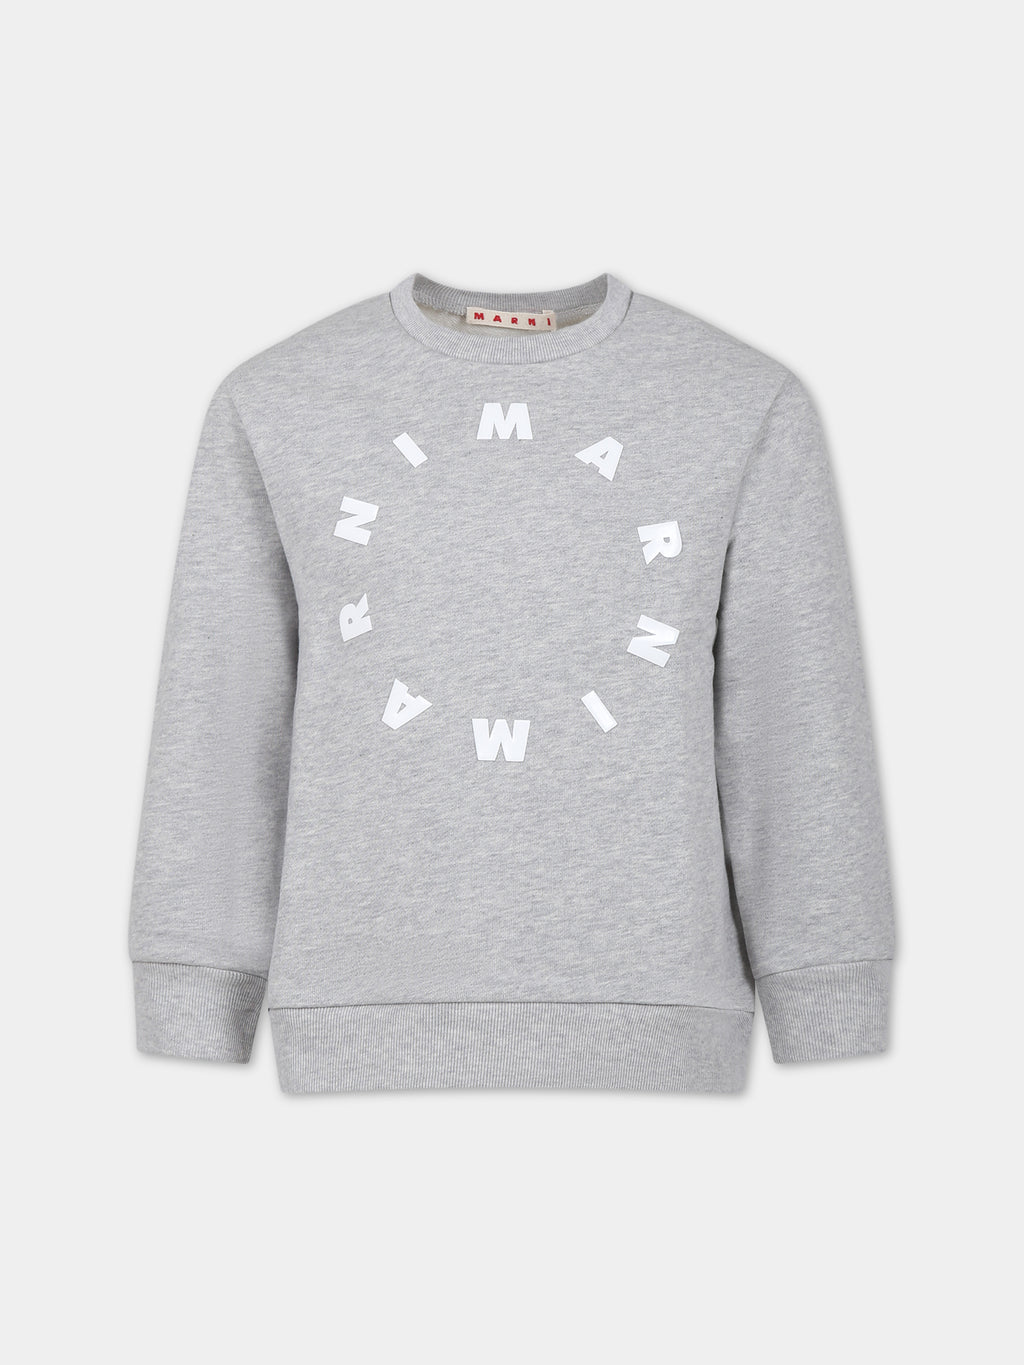 Grey sweatshirt for kids with logo